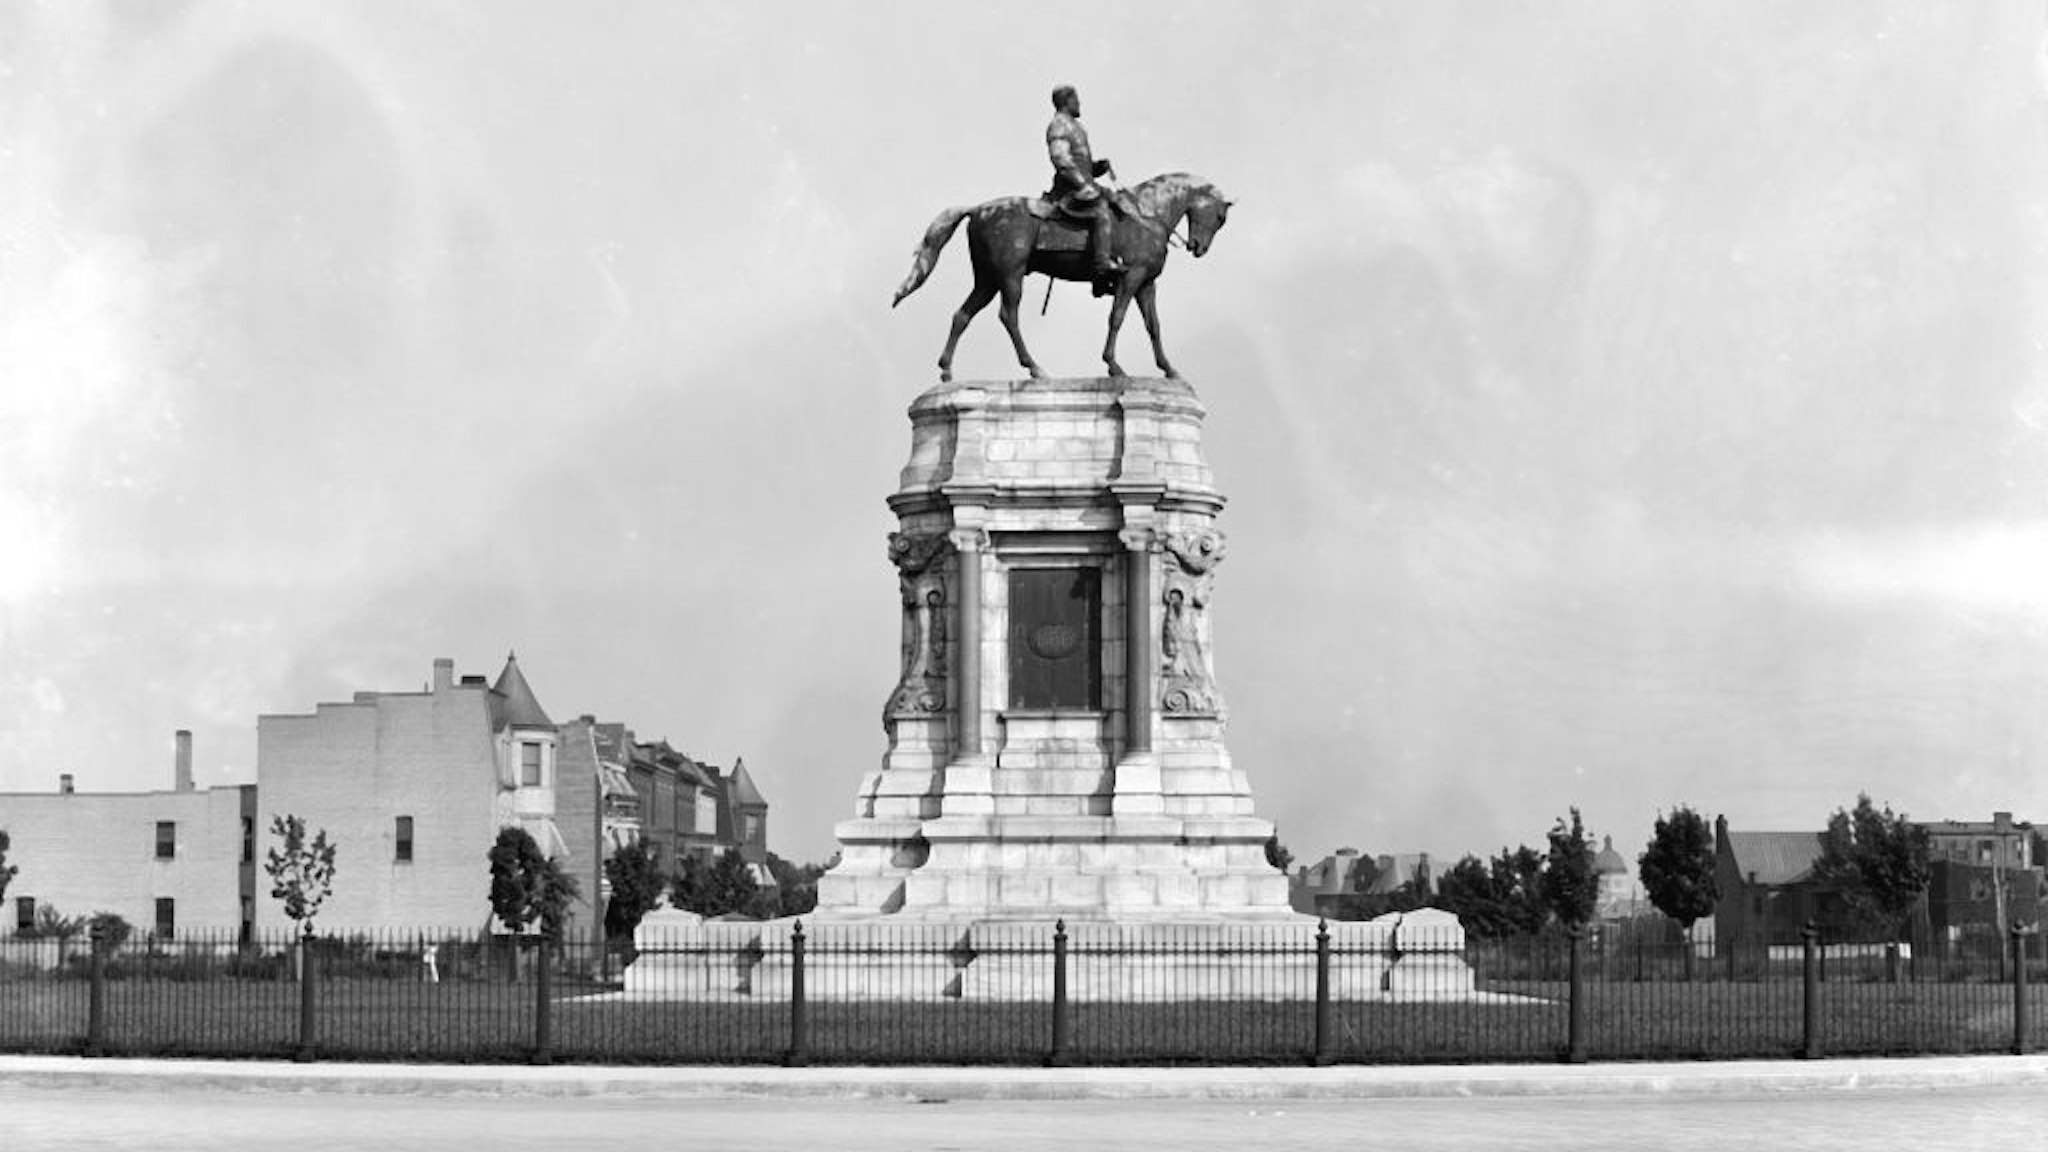 Equestrian statue of Robert E. Lee in Richmond, Virginia in 1905.